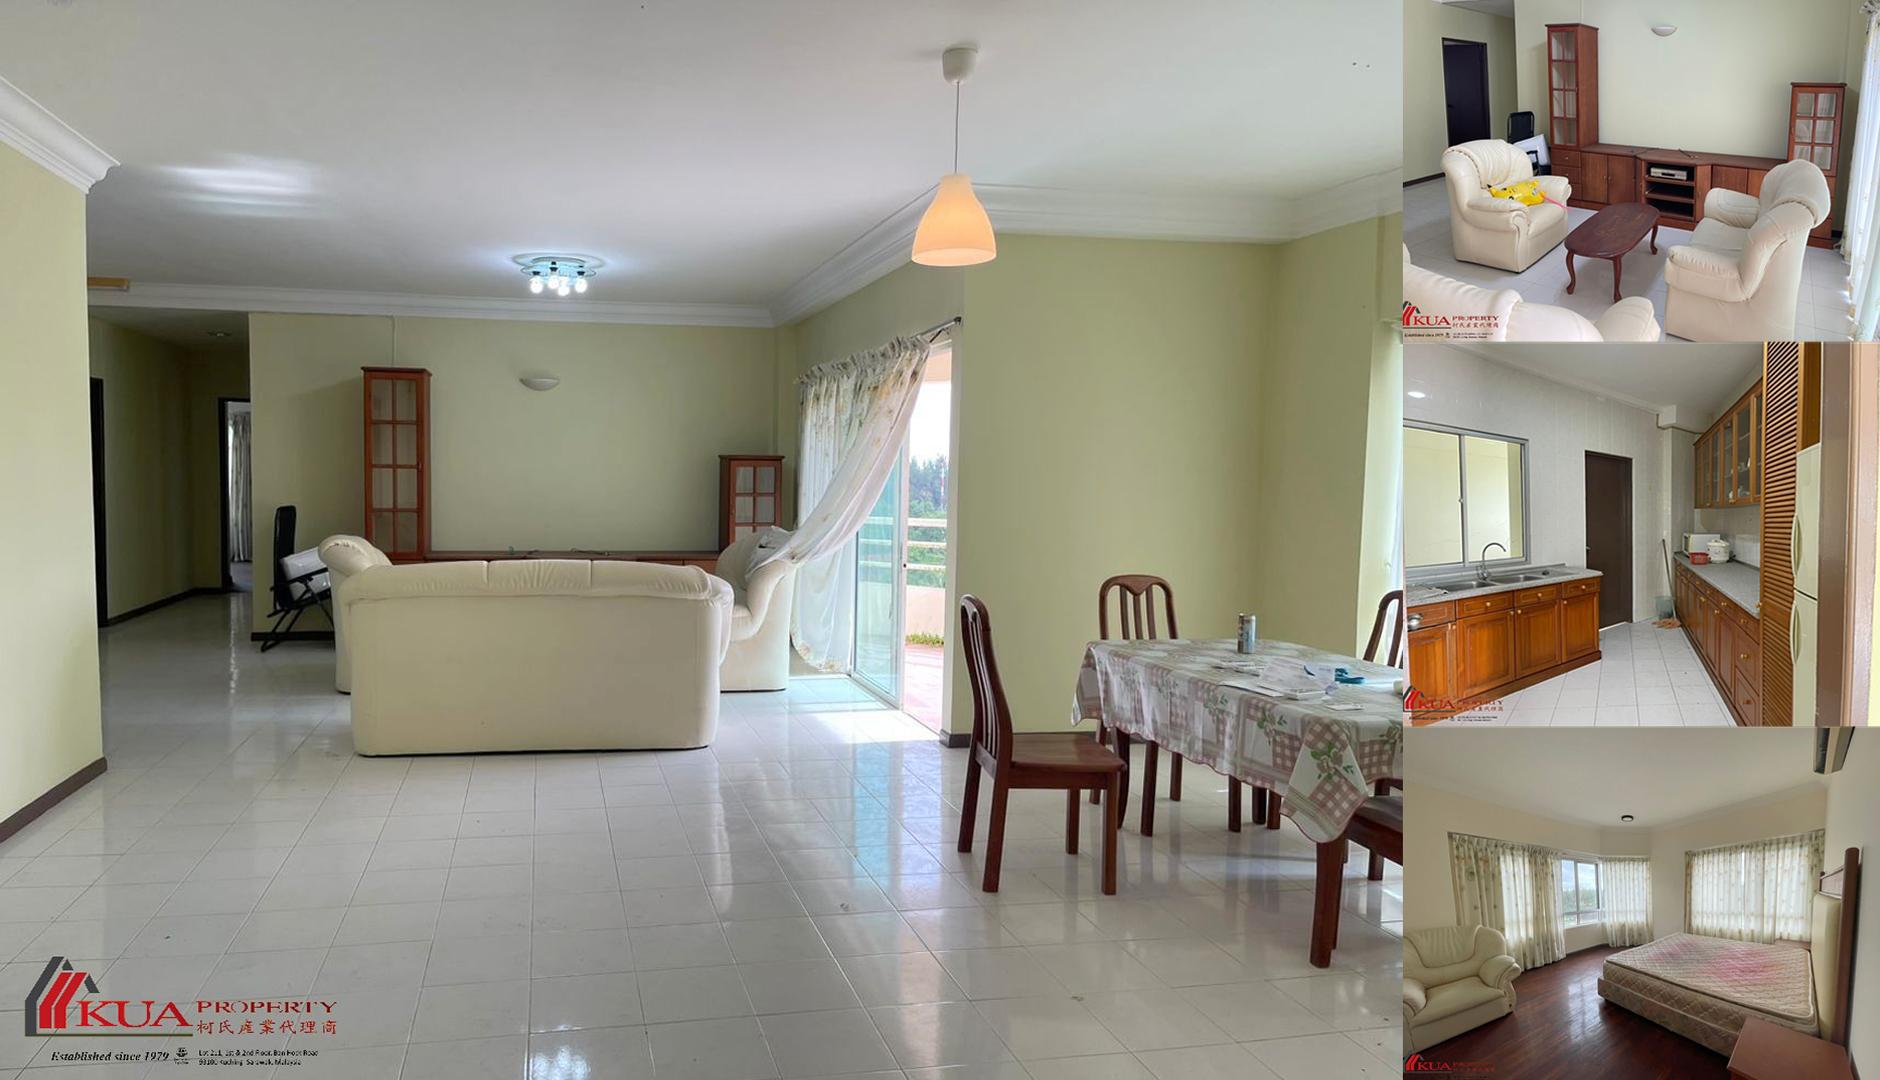 Kasuma Resort Condominium FOR SALE! Located at Petra Jaya